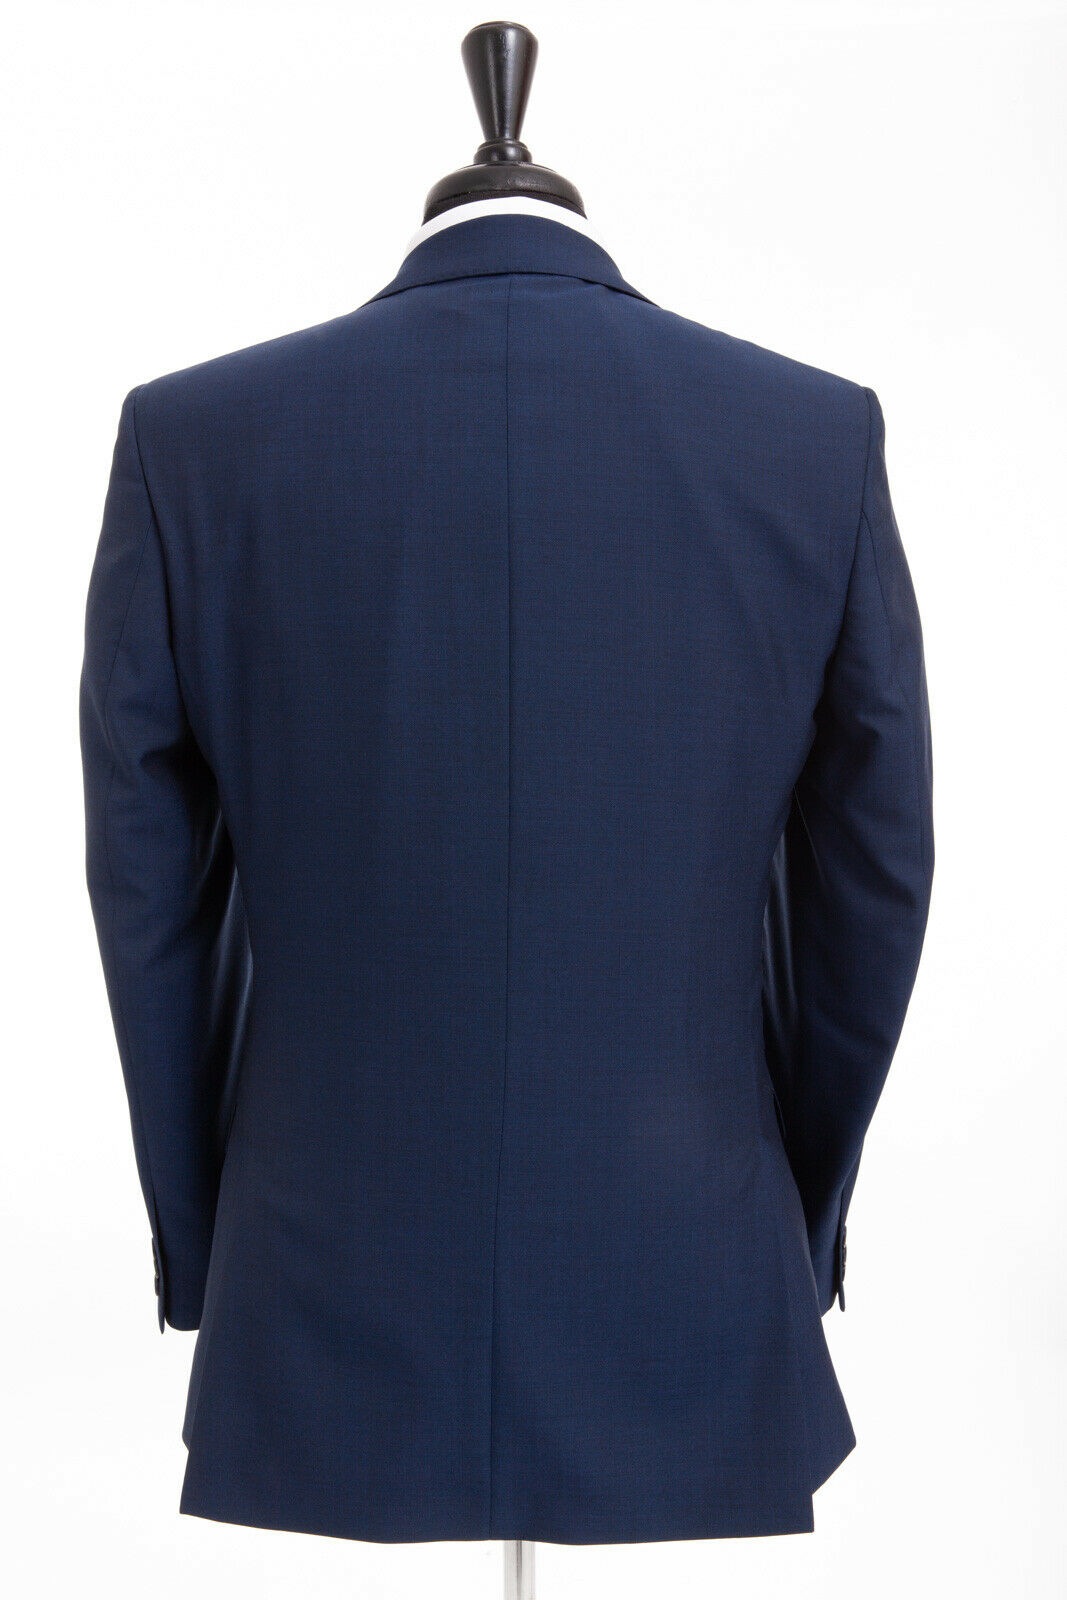 Pierre Cardin Navy 3 Piece Wedding Prom Suit - Brand New